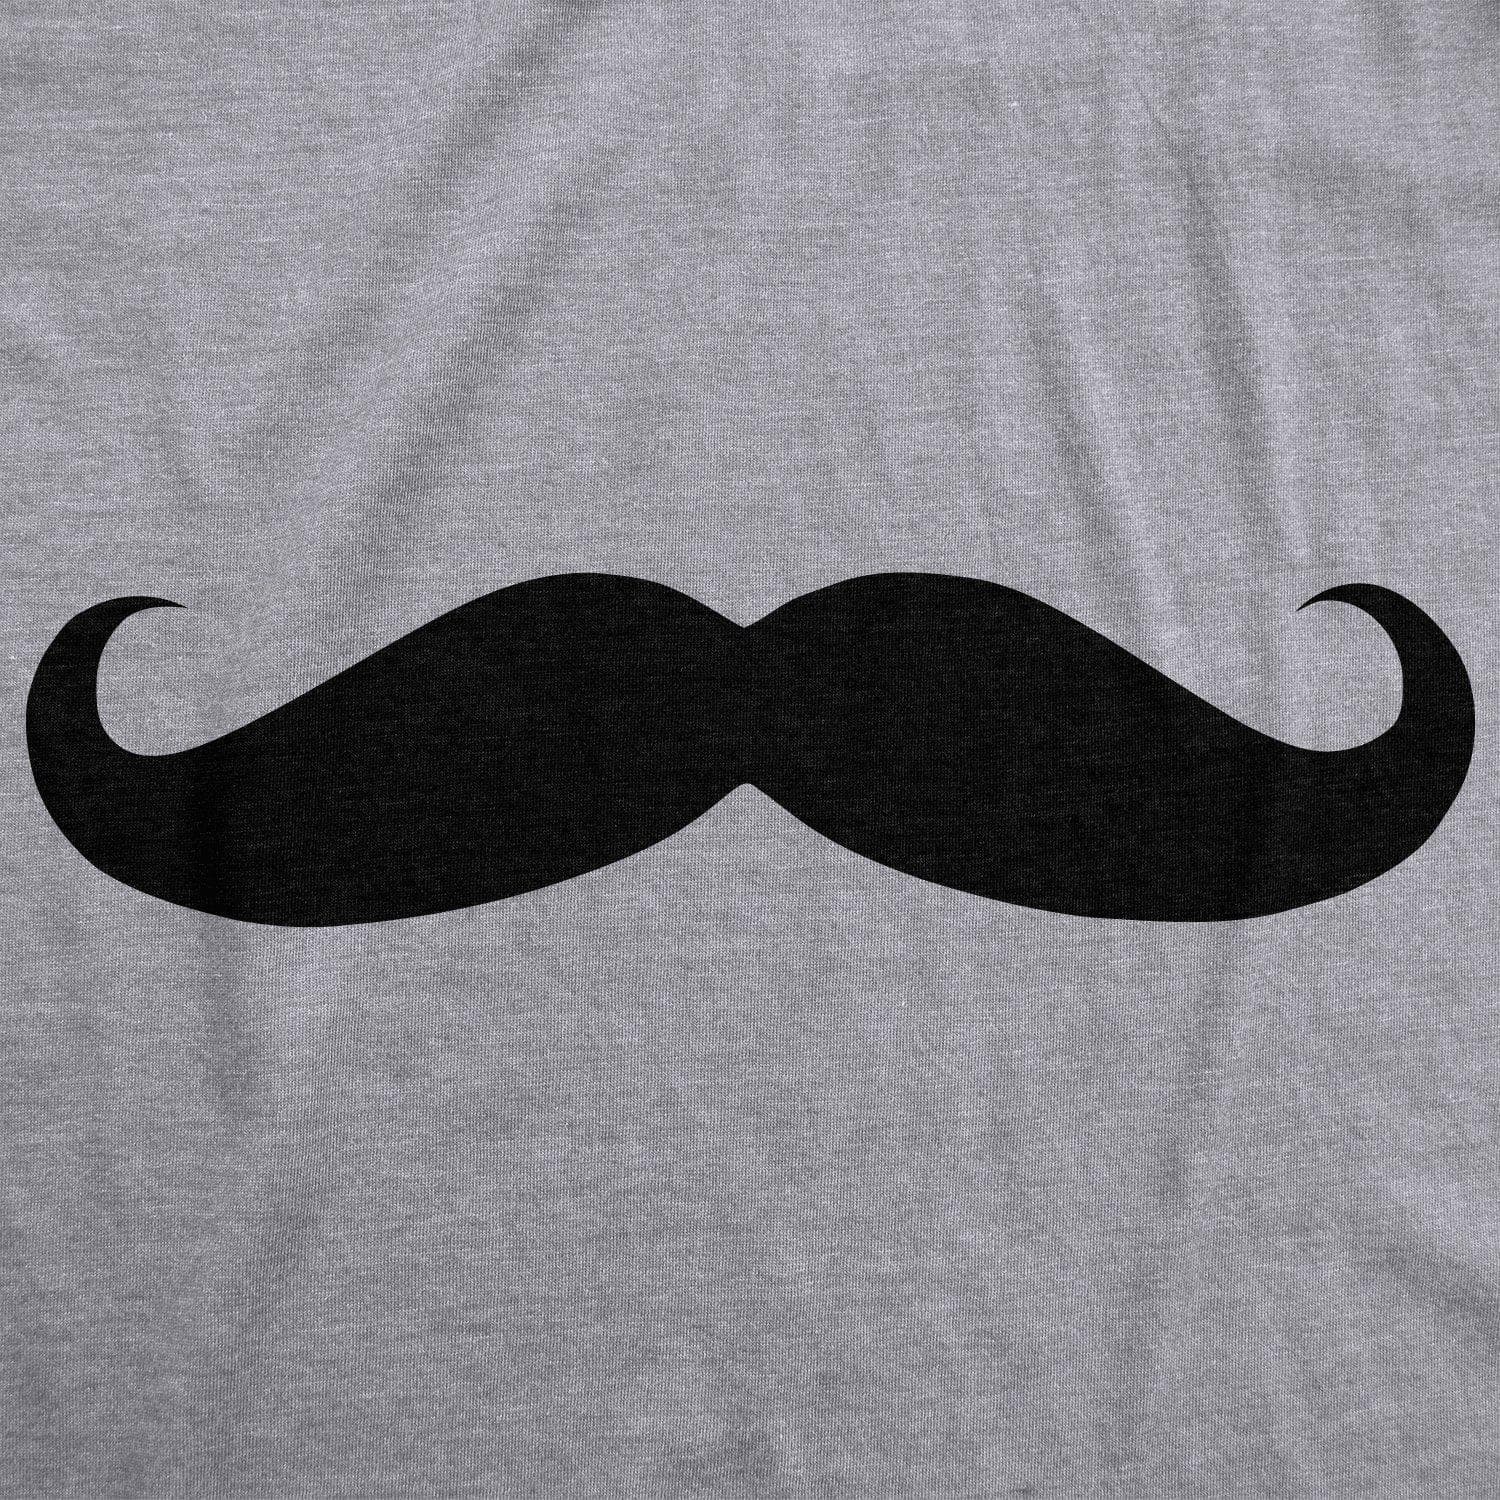 Ask Me About My Mustache Flip Men's Tshirt  -  Crazy Dog T-Shirts